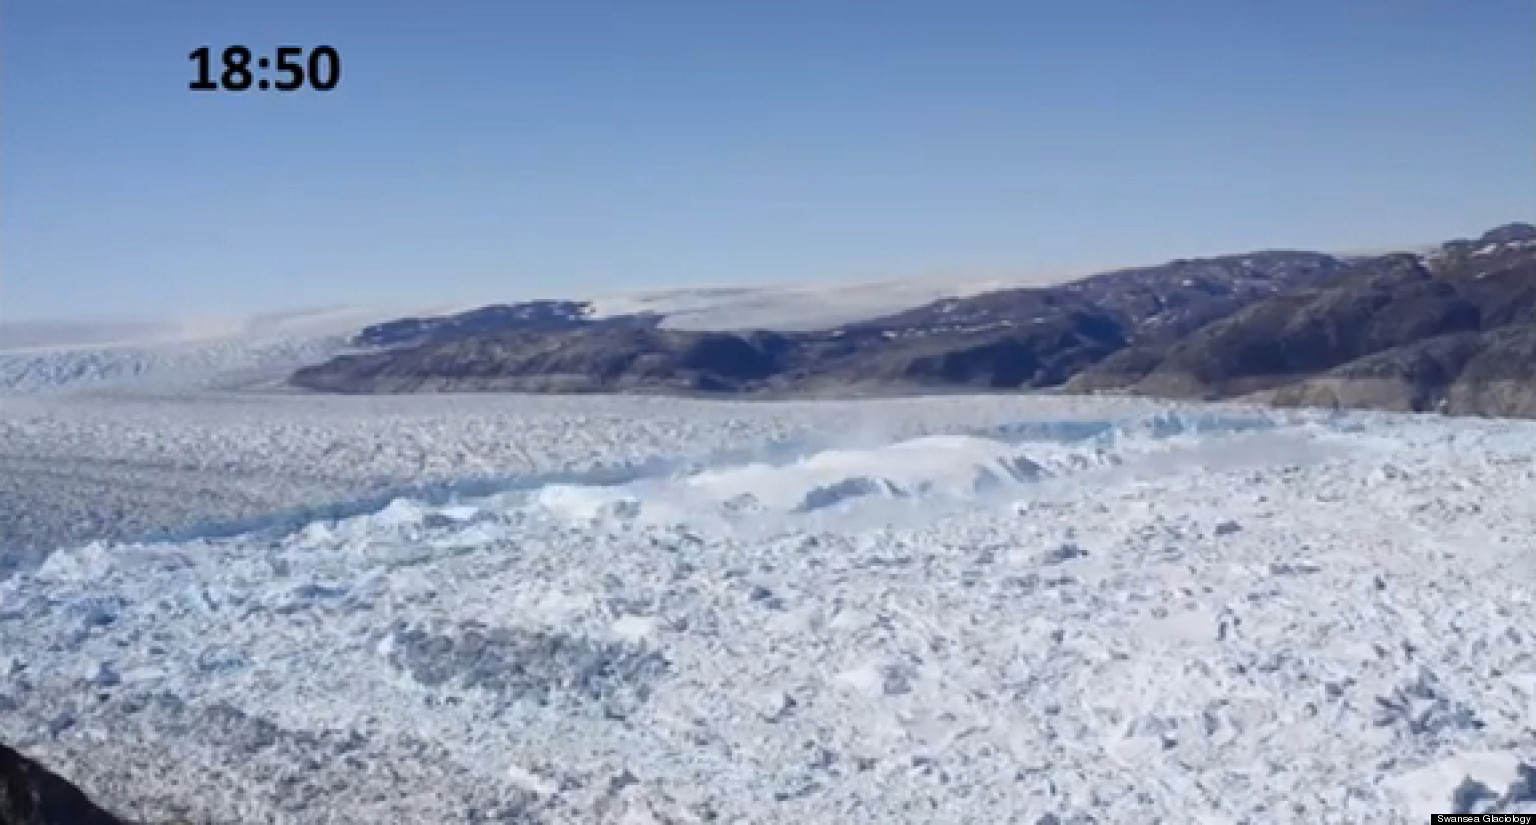 Helheim Glacier Calving Video Shows Ice Breaking Off Into Sea | HuffPost